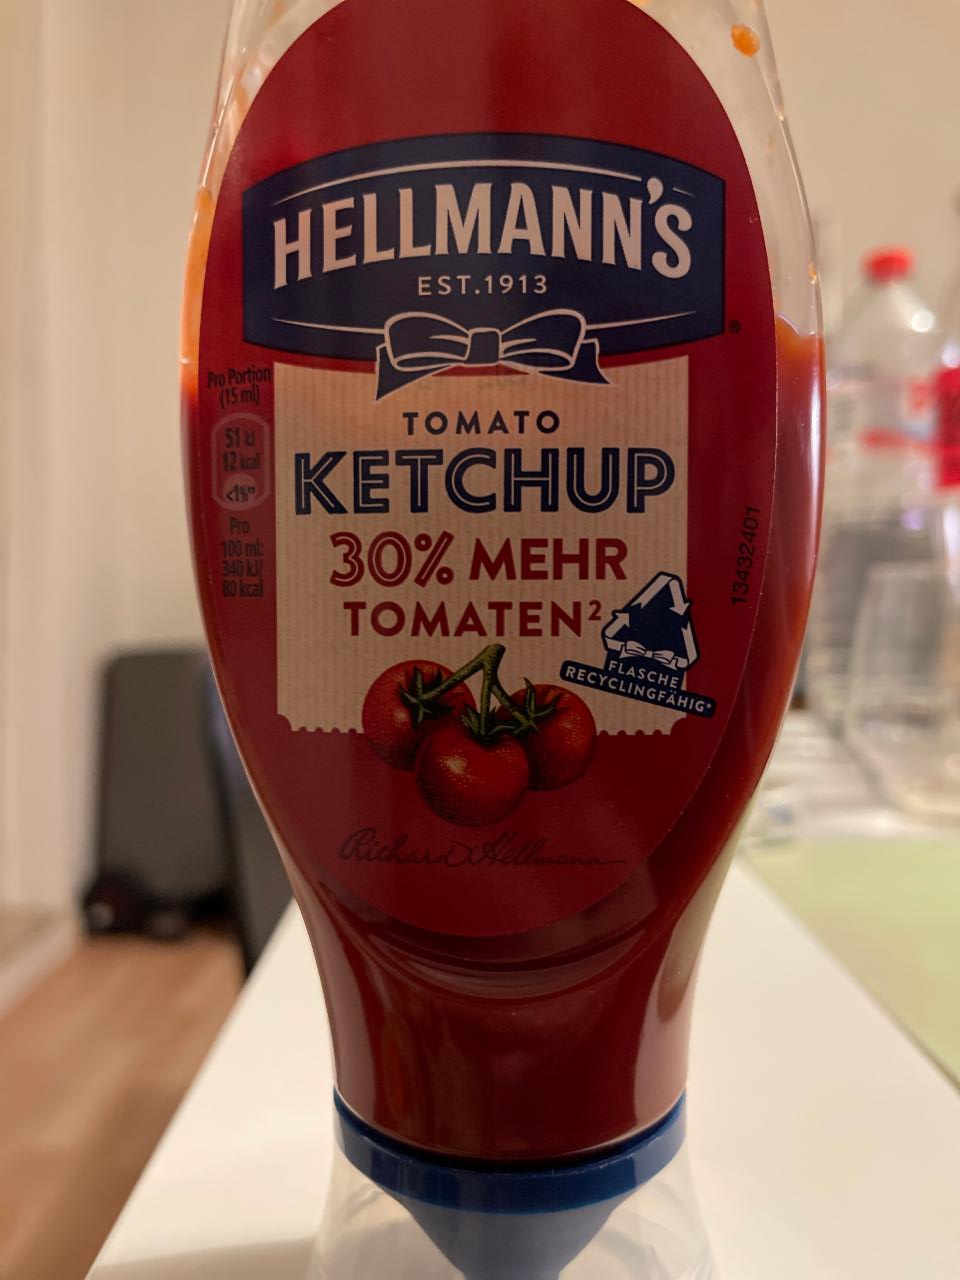 Fotografie - Hellmann’s Tomato ketchup 30% mehr tomaten